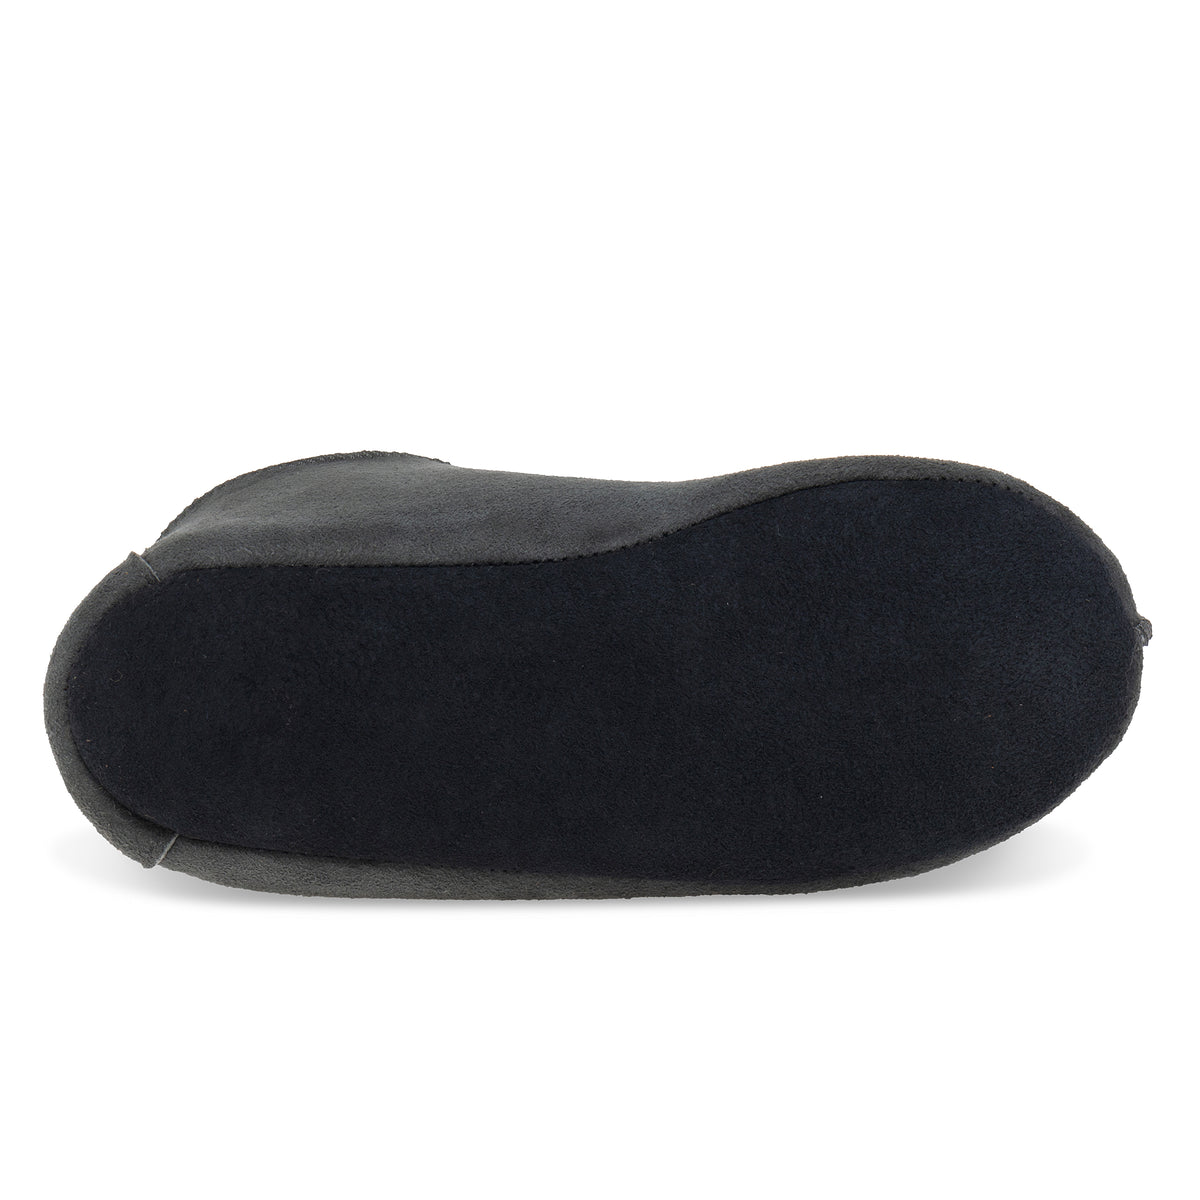 Berit Sheepskin Slippers/Yoga Shoe - Graphite